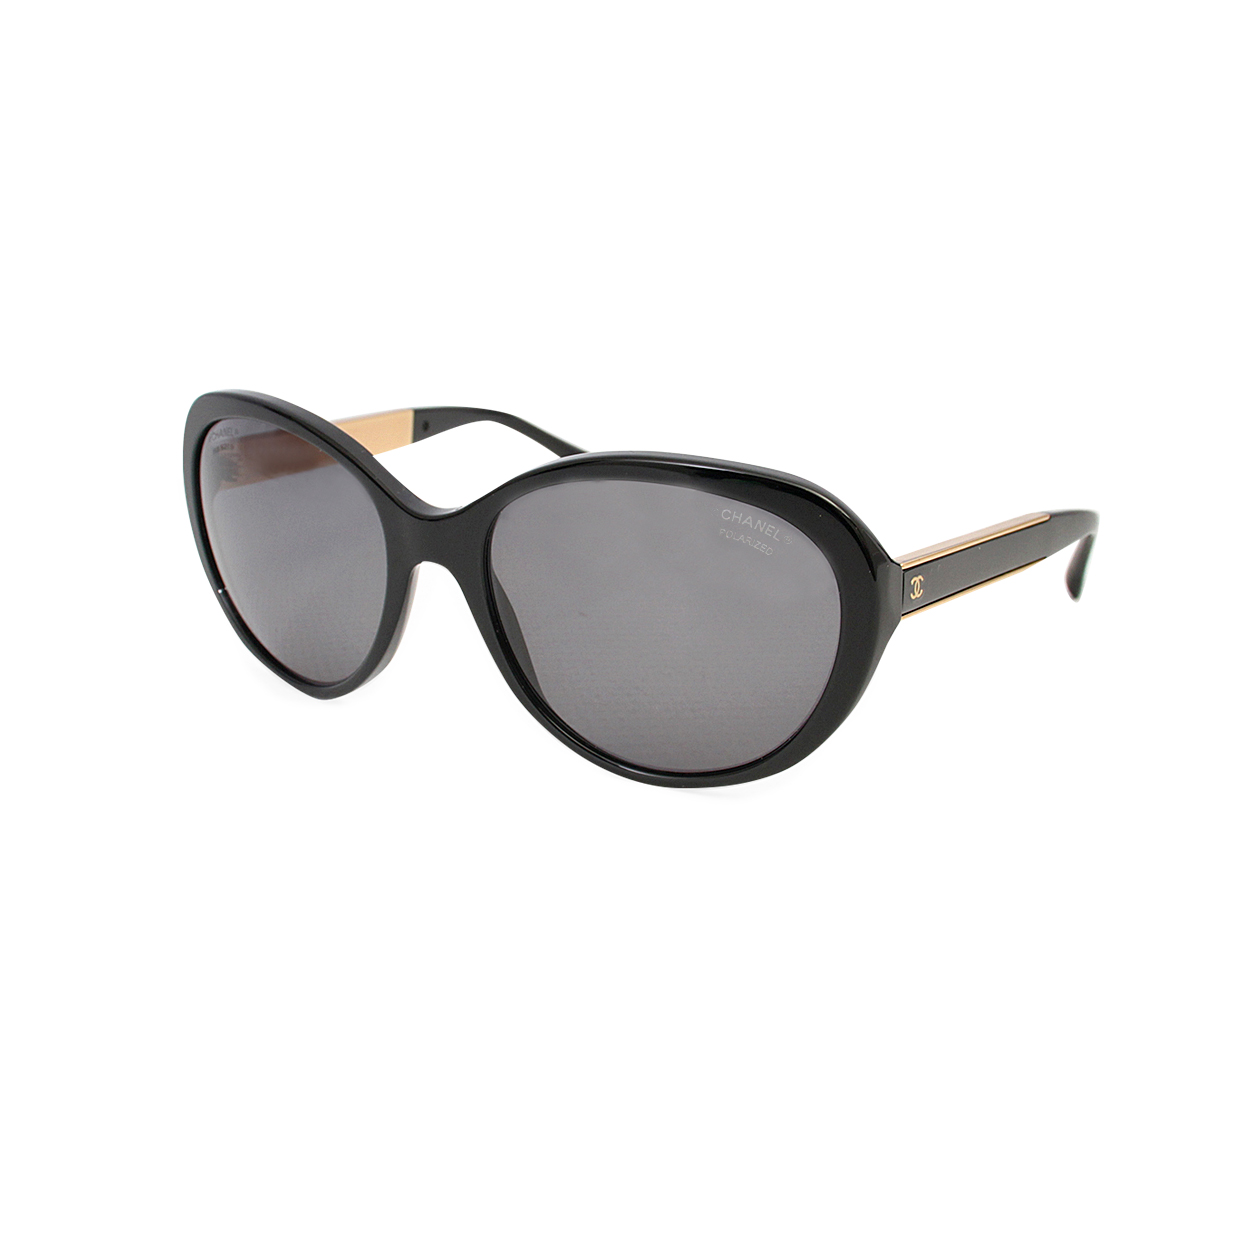 Chanel Square Sunglasses CH5487A 55 Grey  Black  Gold Polarised Sunglasses   Sunglass Hut New Zealand